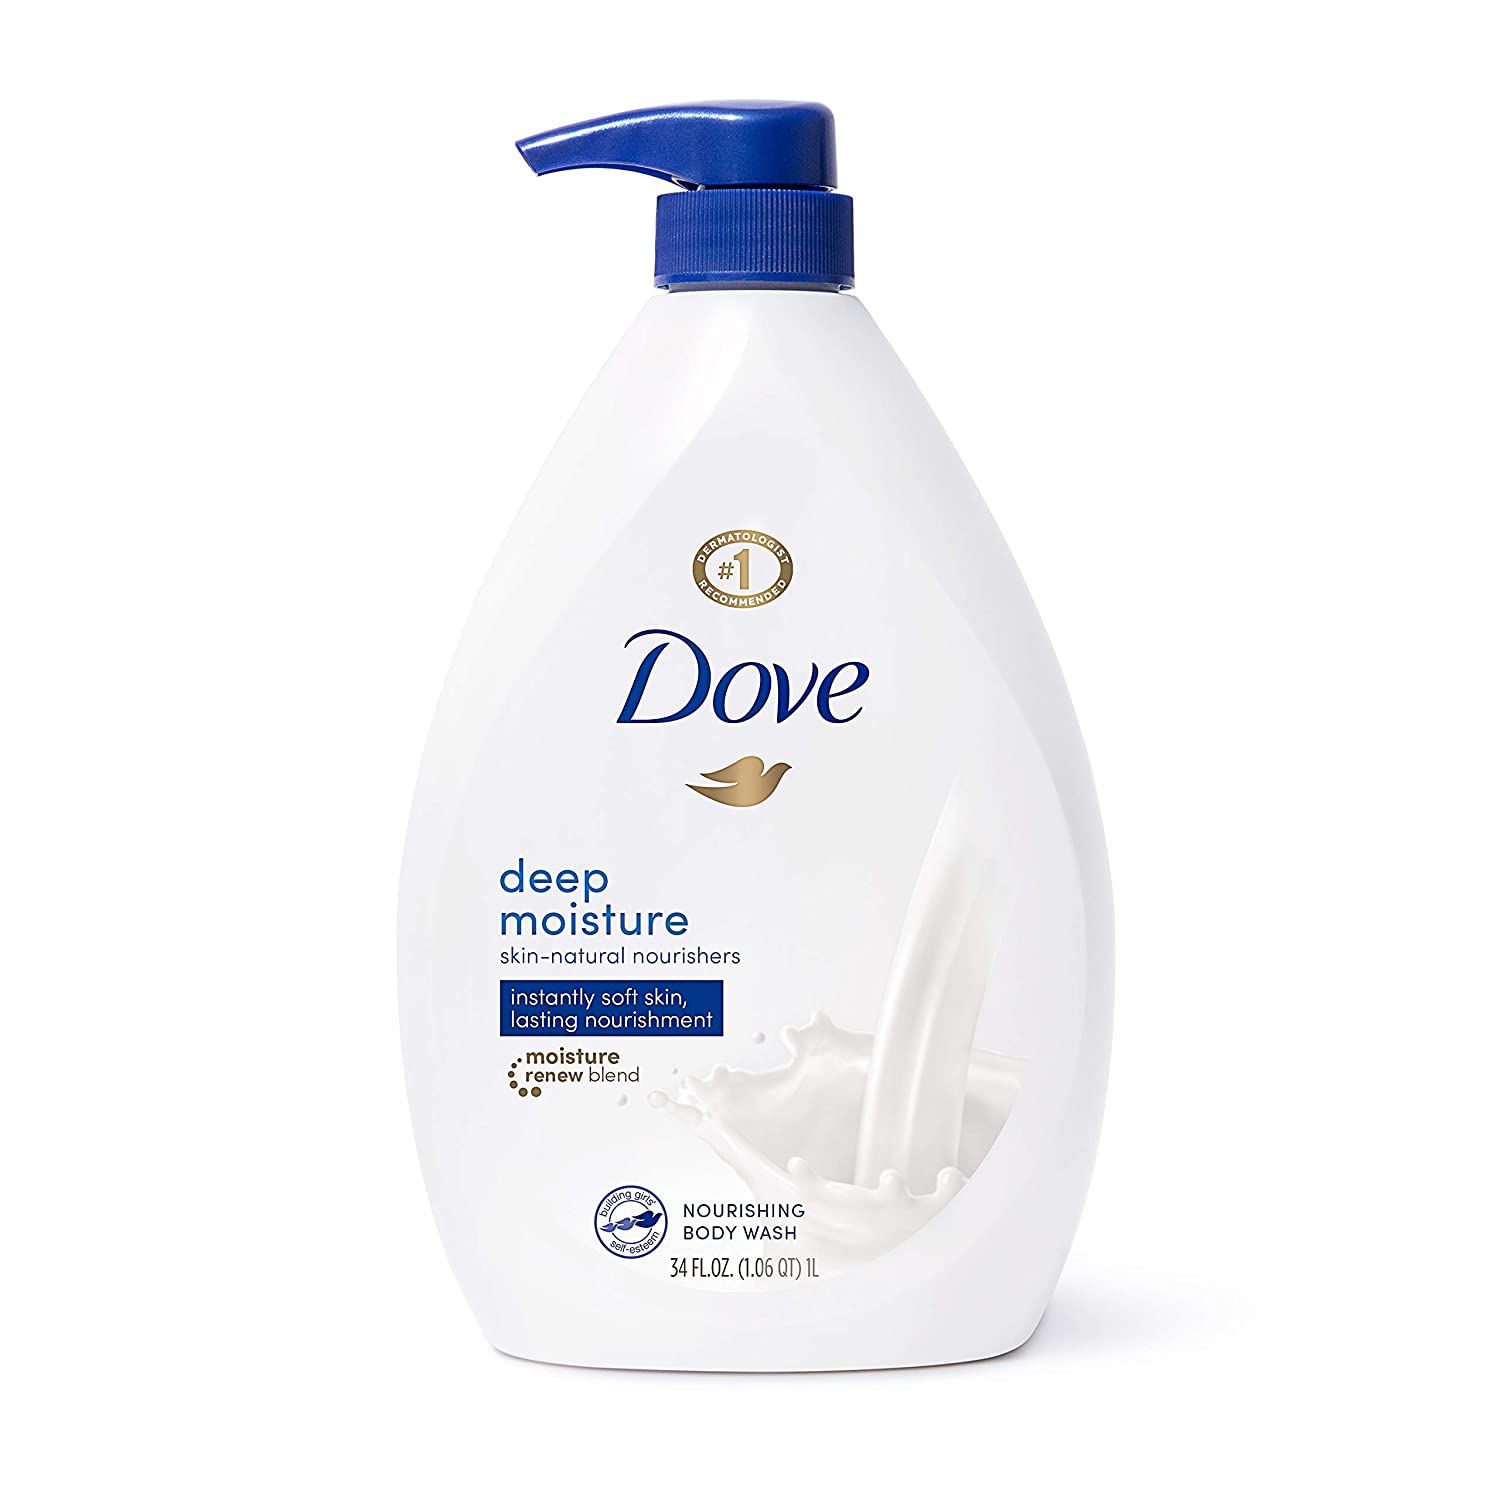 34-Oz Dove Deep Moisture Nourishing Body Wash $5.95 w/ S&S + Free Shipping w/ Prime or on $25+